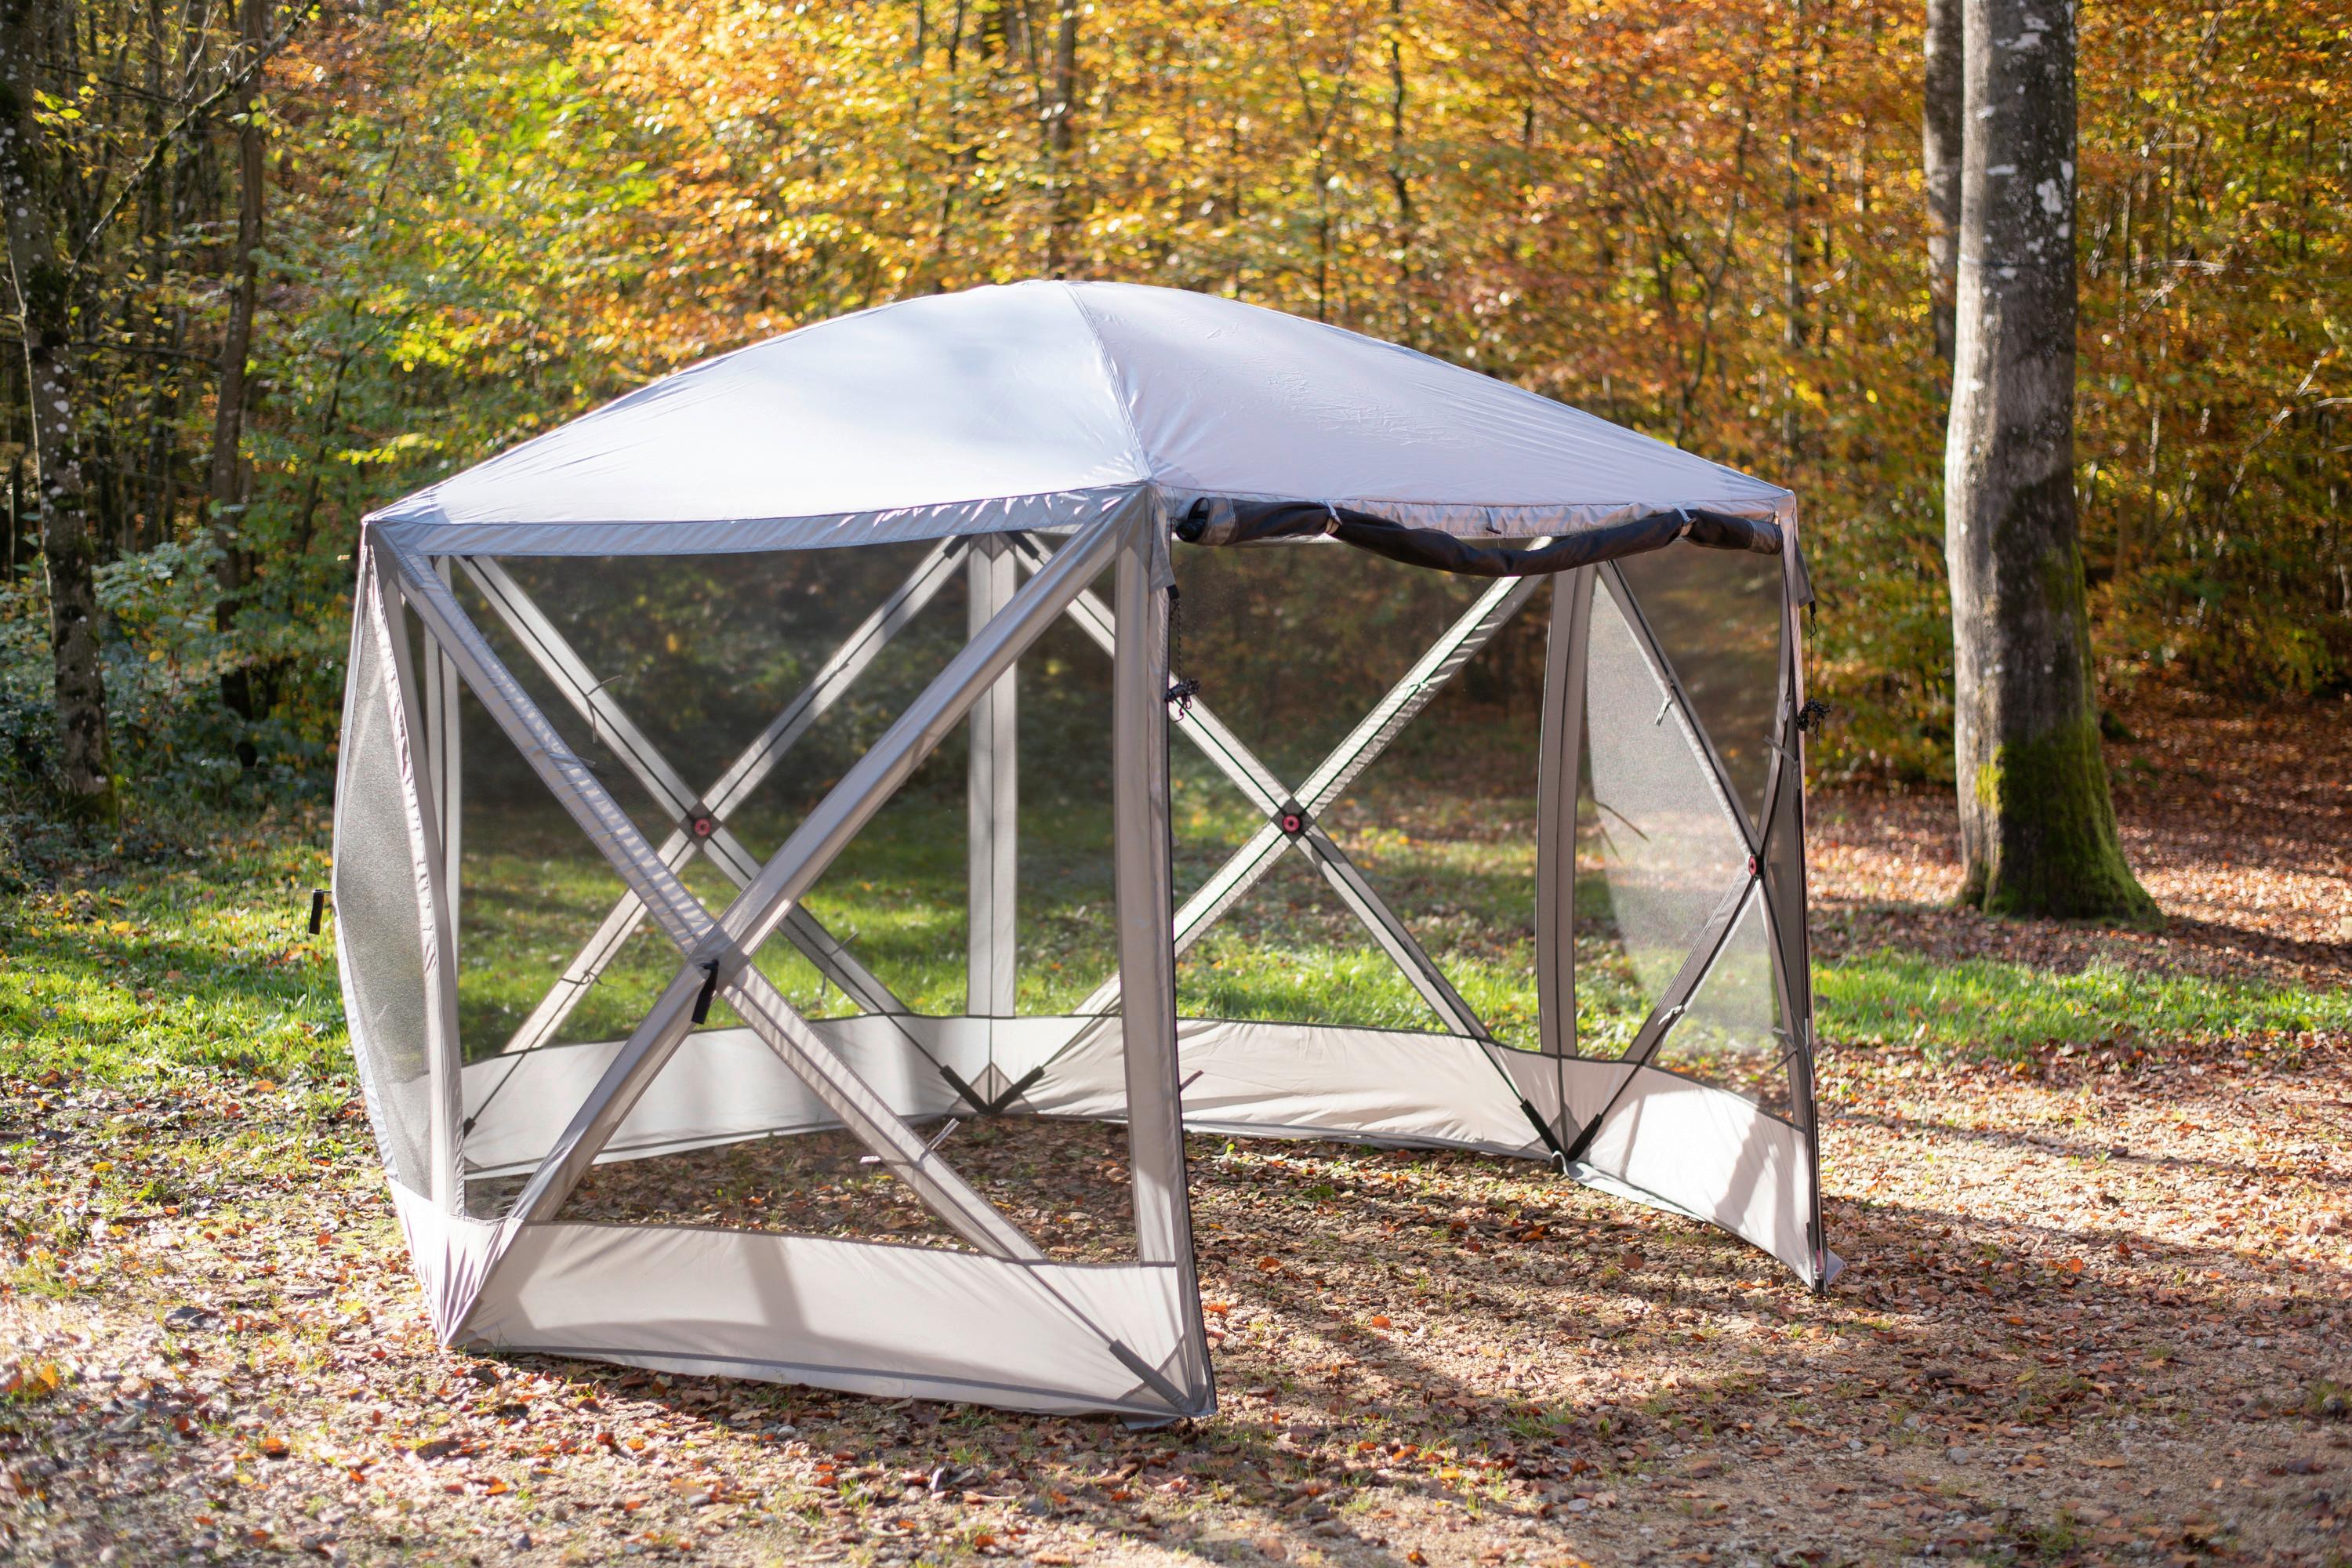 Pavillon Camping Pavillon Flexion - Grau, Basics, Textil/Metall (300/225/350cm)